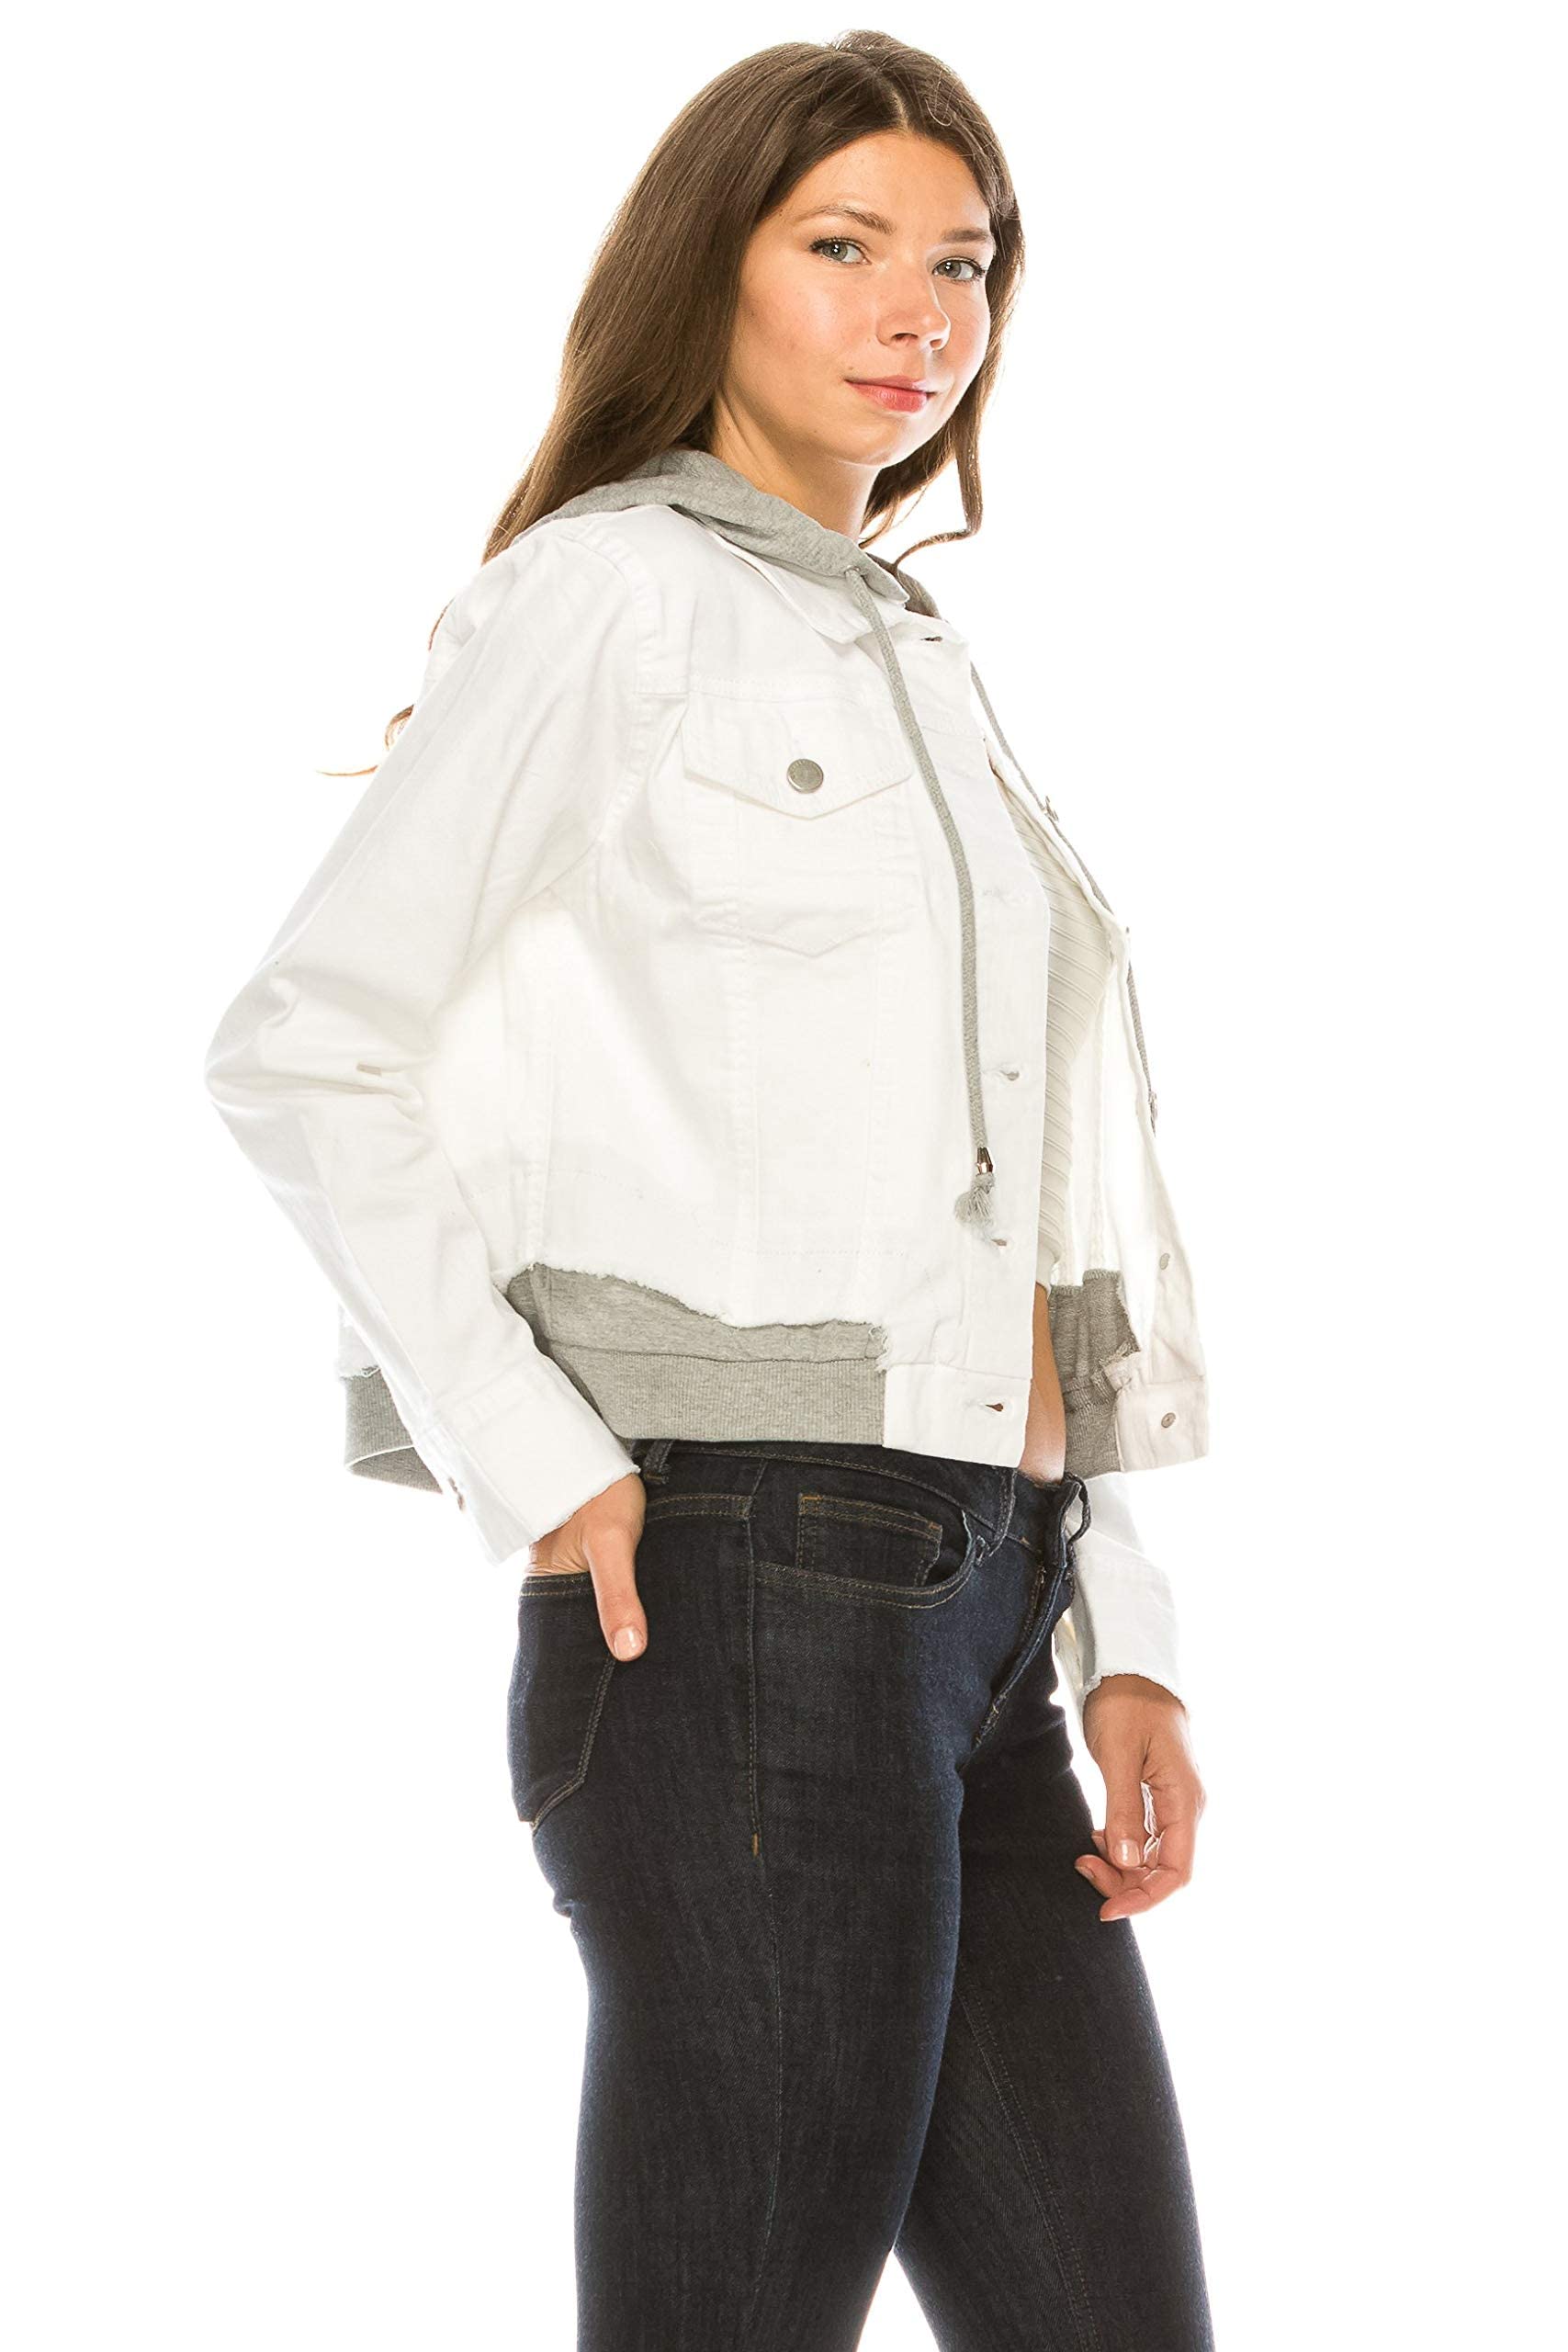 Khanomak Women's Denim Jean With Detachable Hoodie Terry Patch Jacket